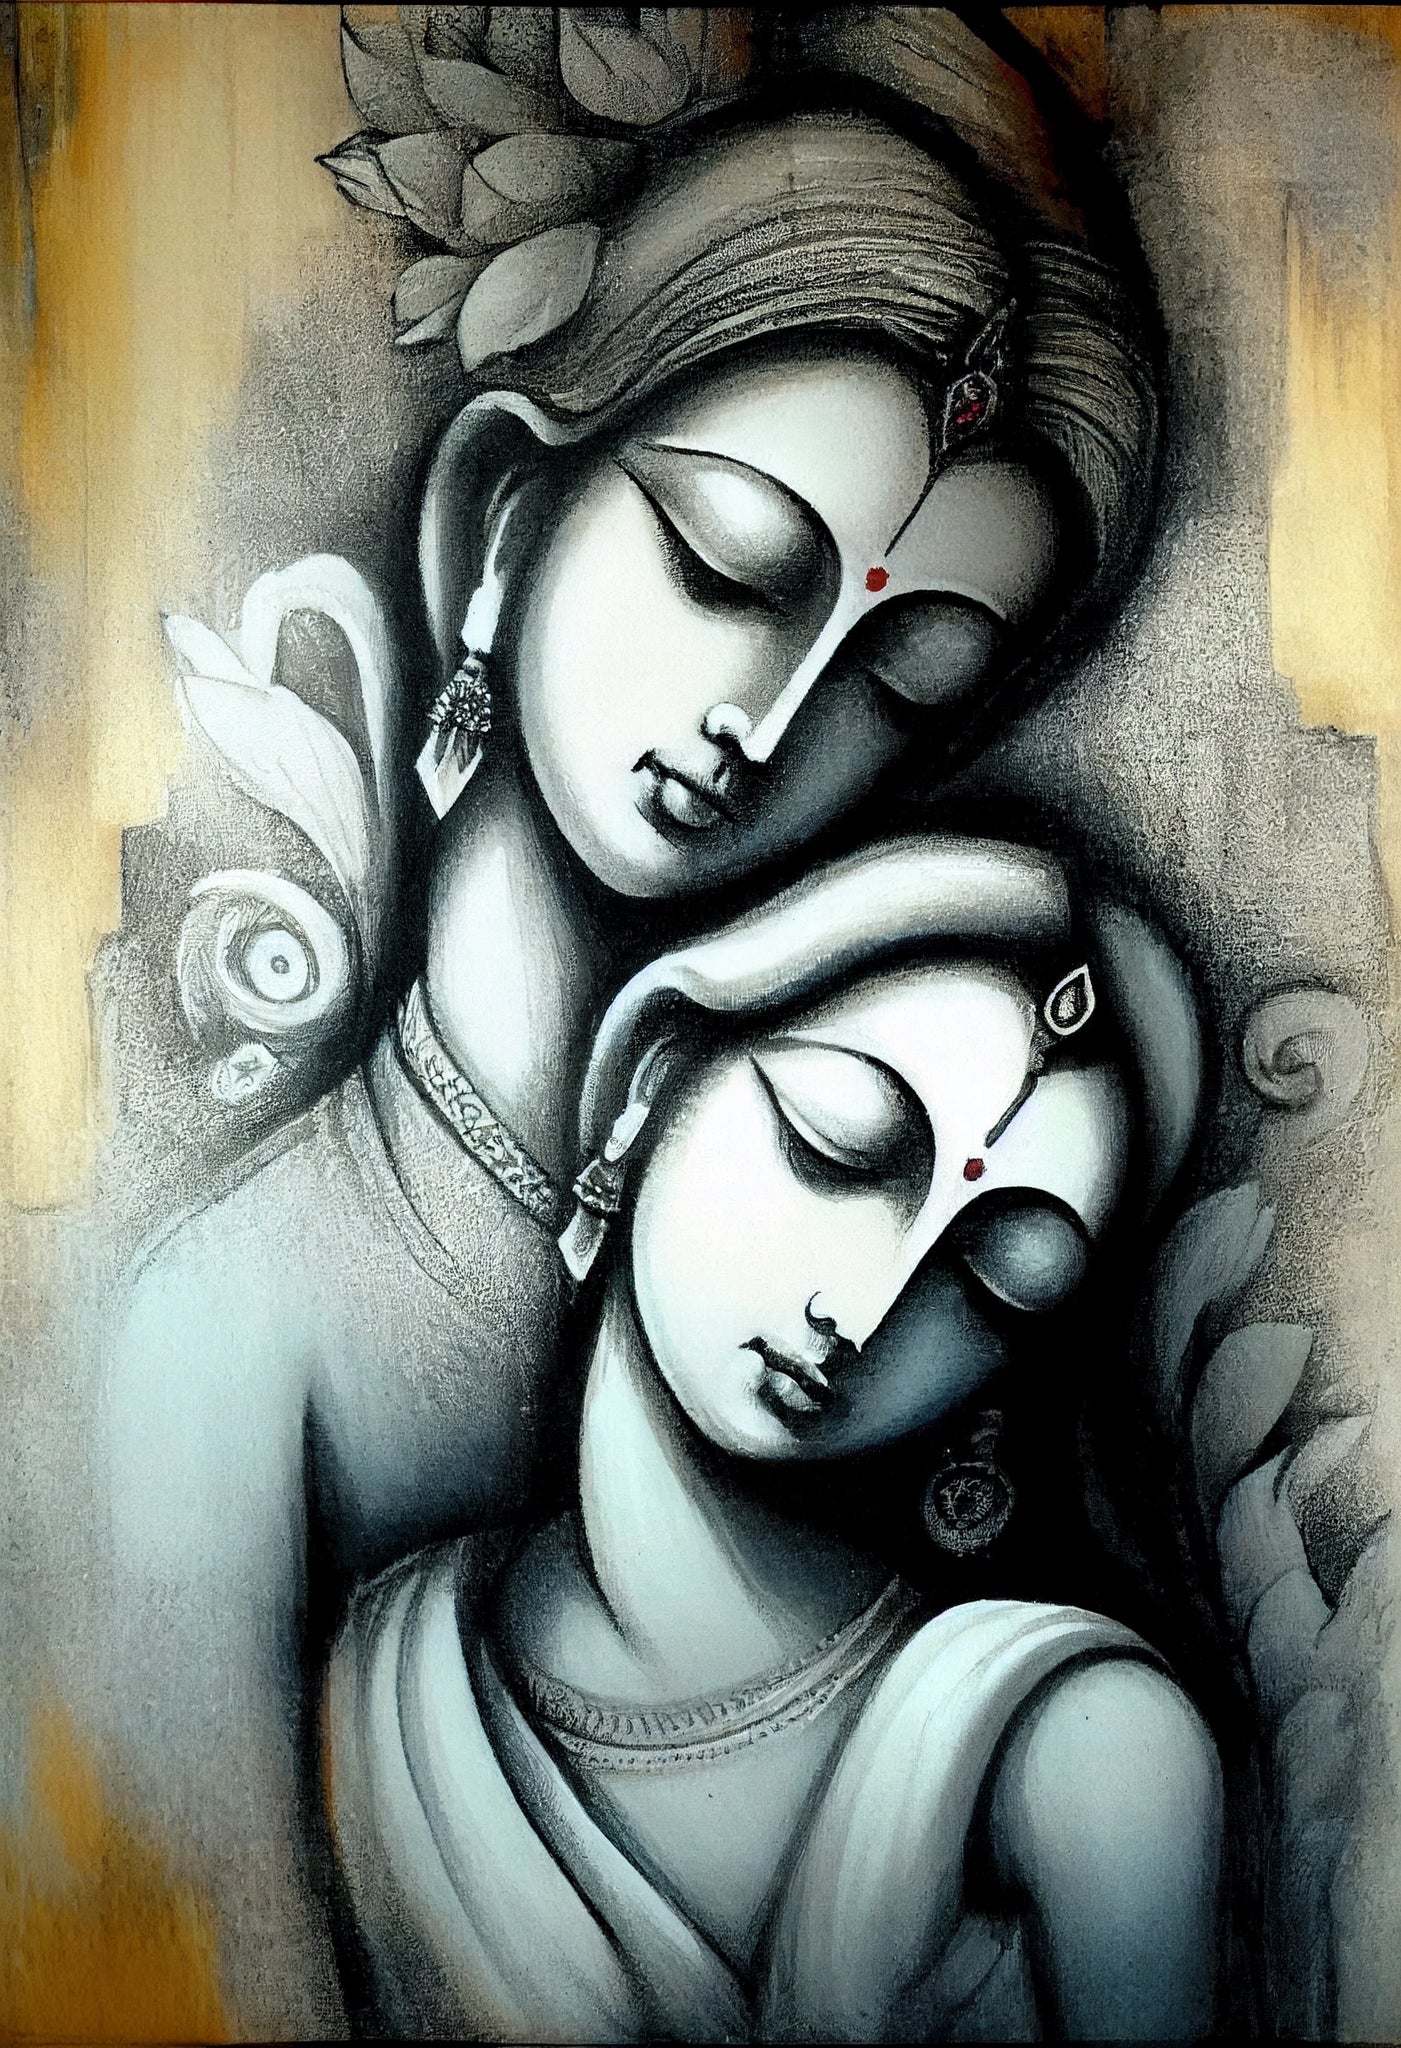 Eternal Love: A Black and White Pencil Modern Art Print of the Divine Couple Radha Krishna